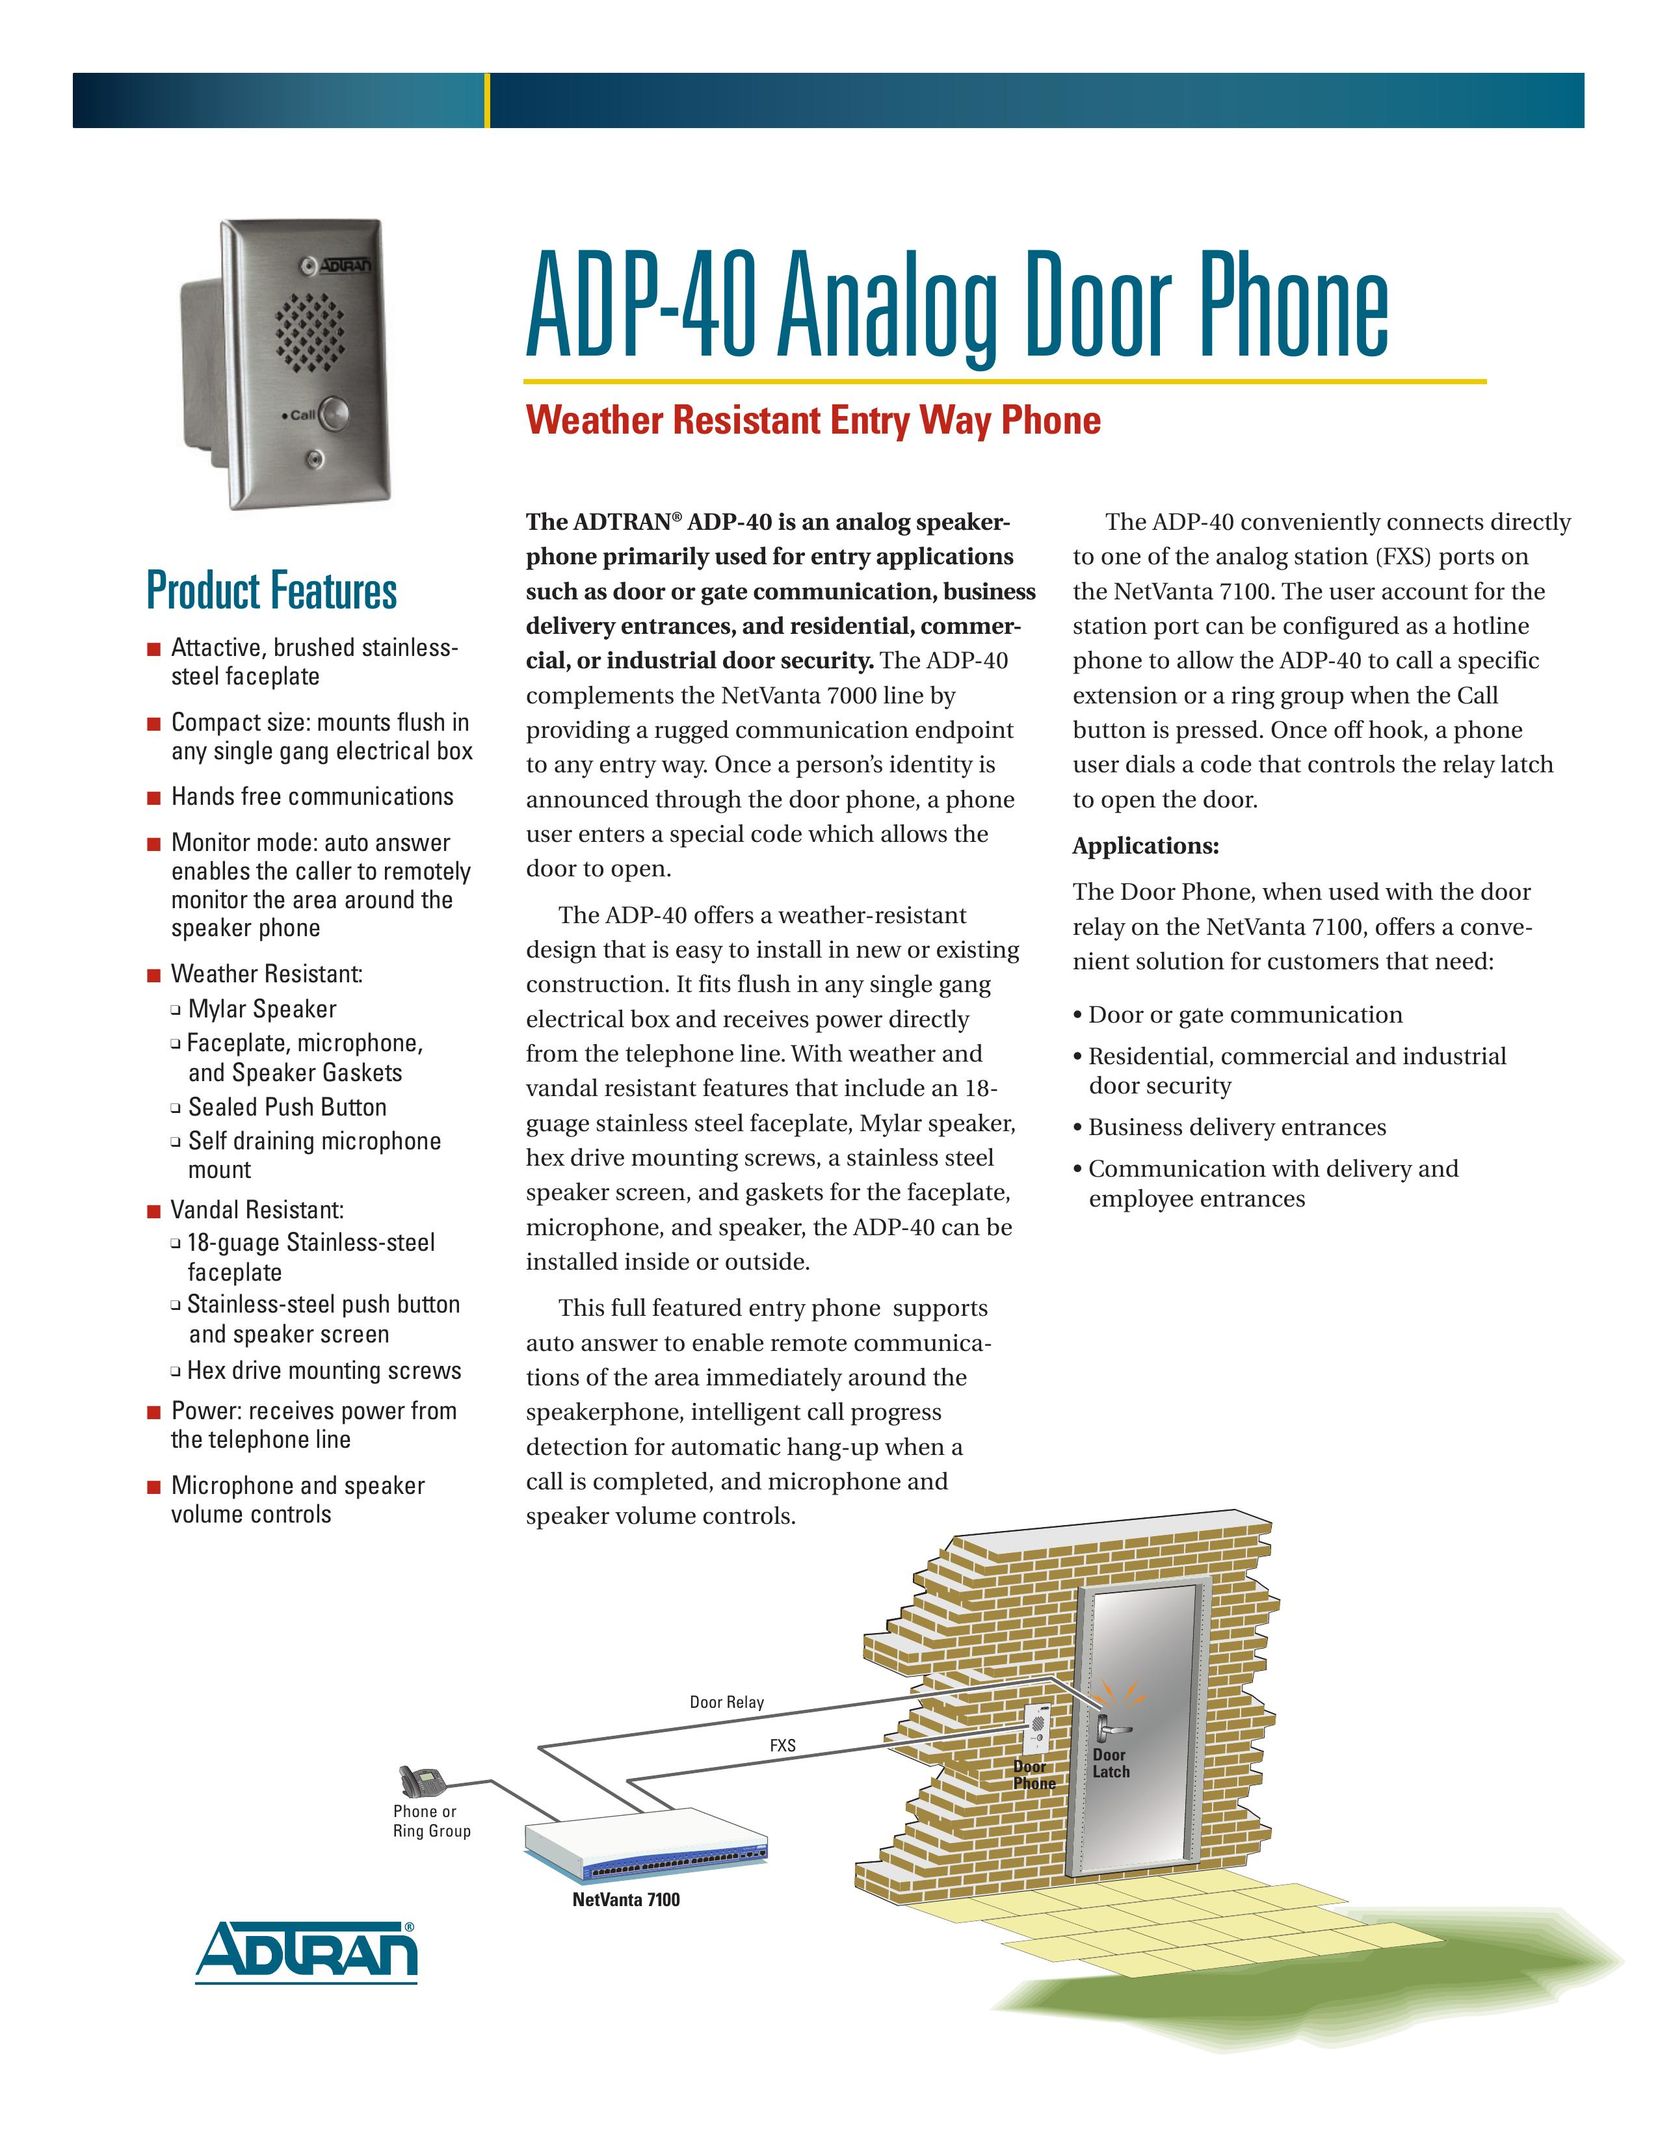 ADTRAN ADP-40 Telephone User Manual